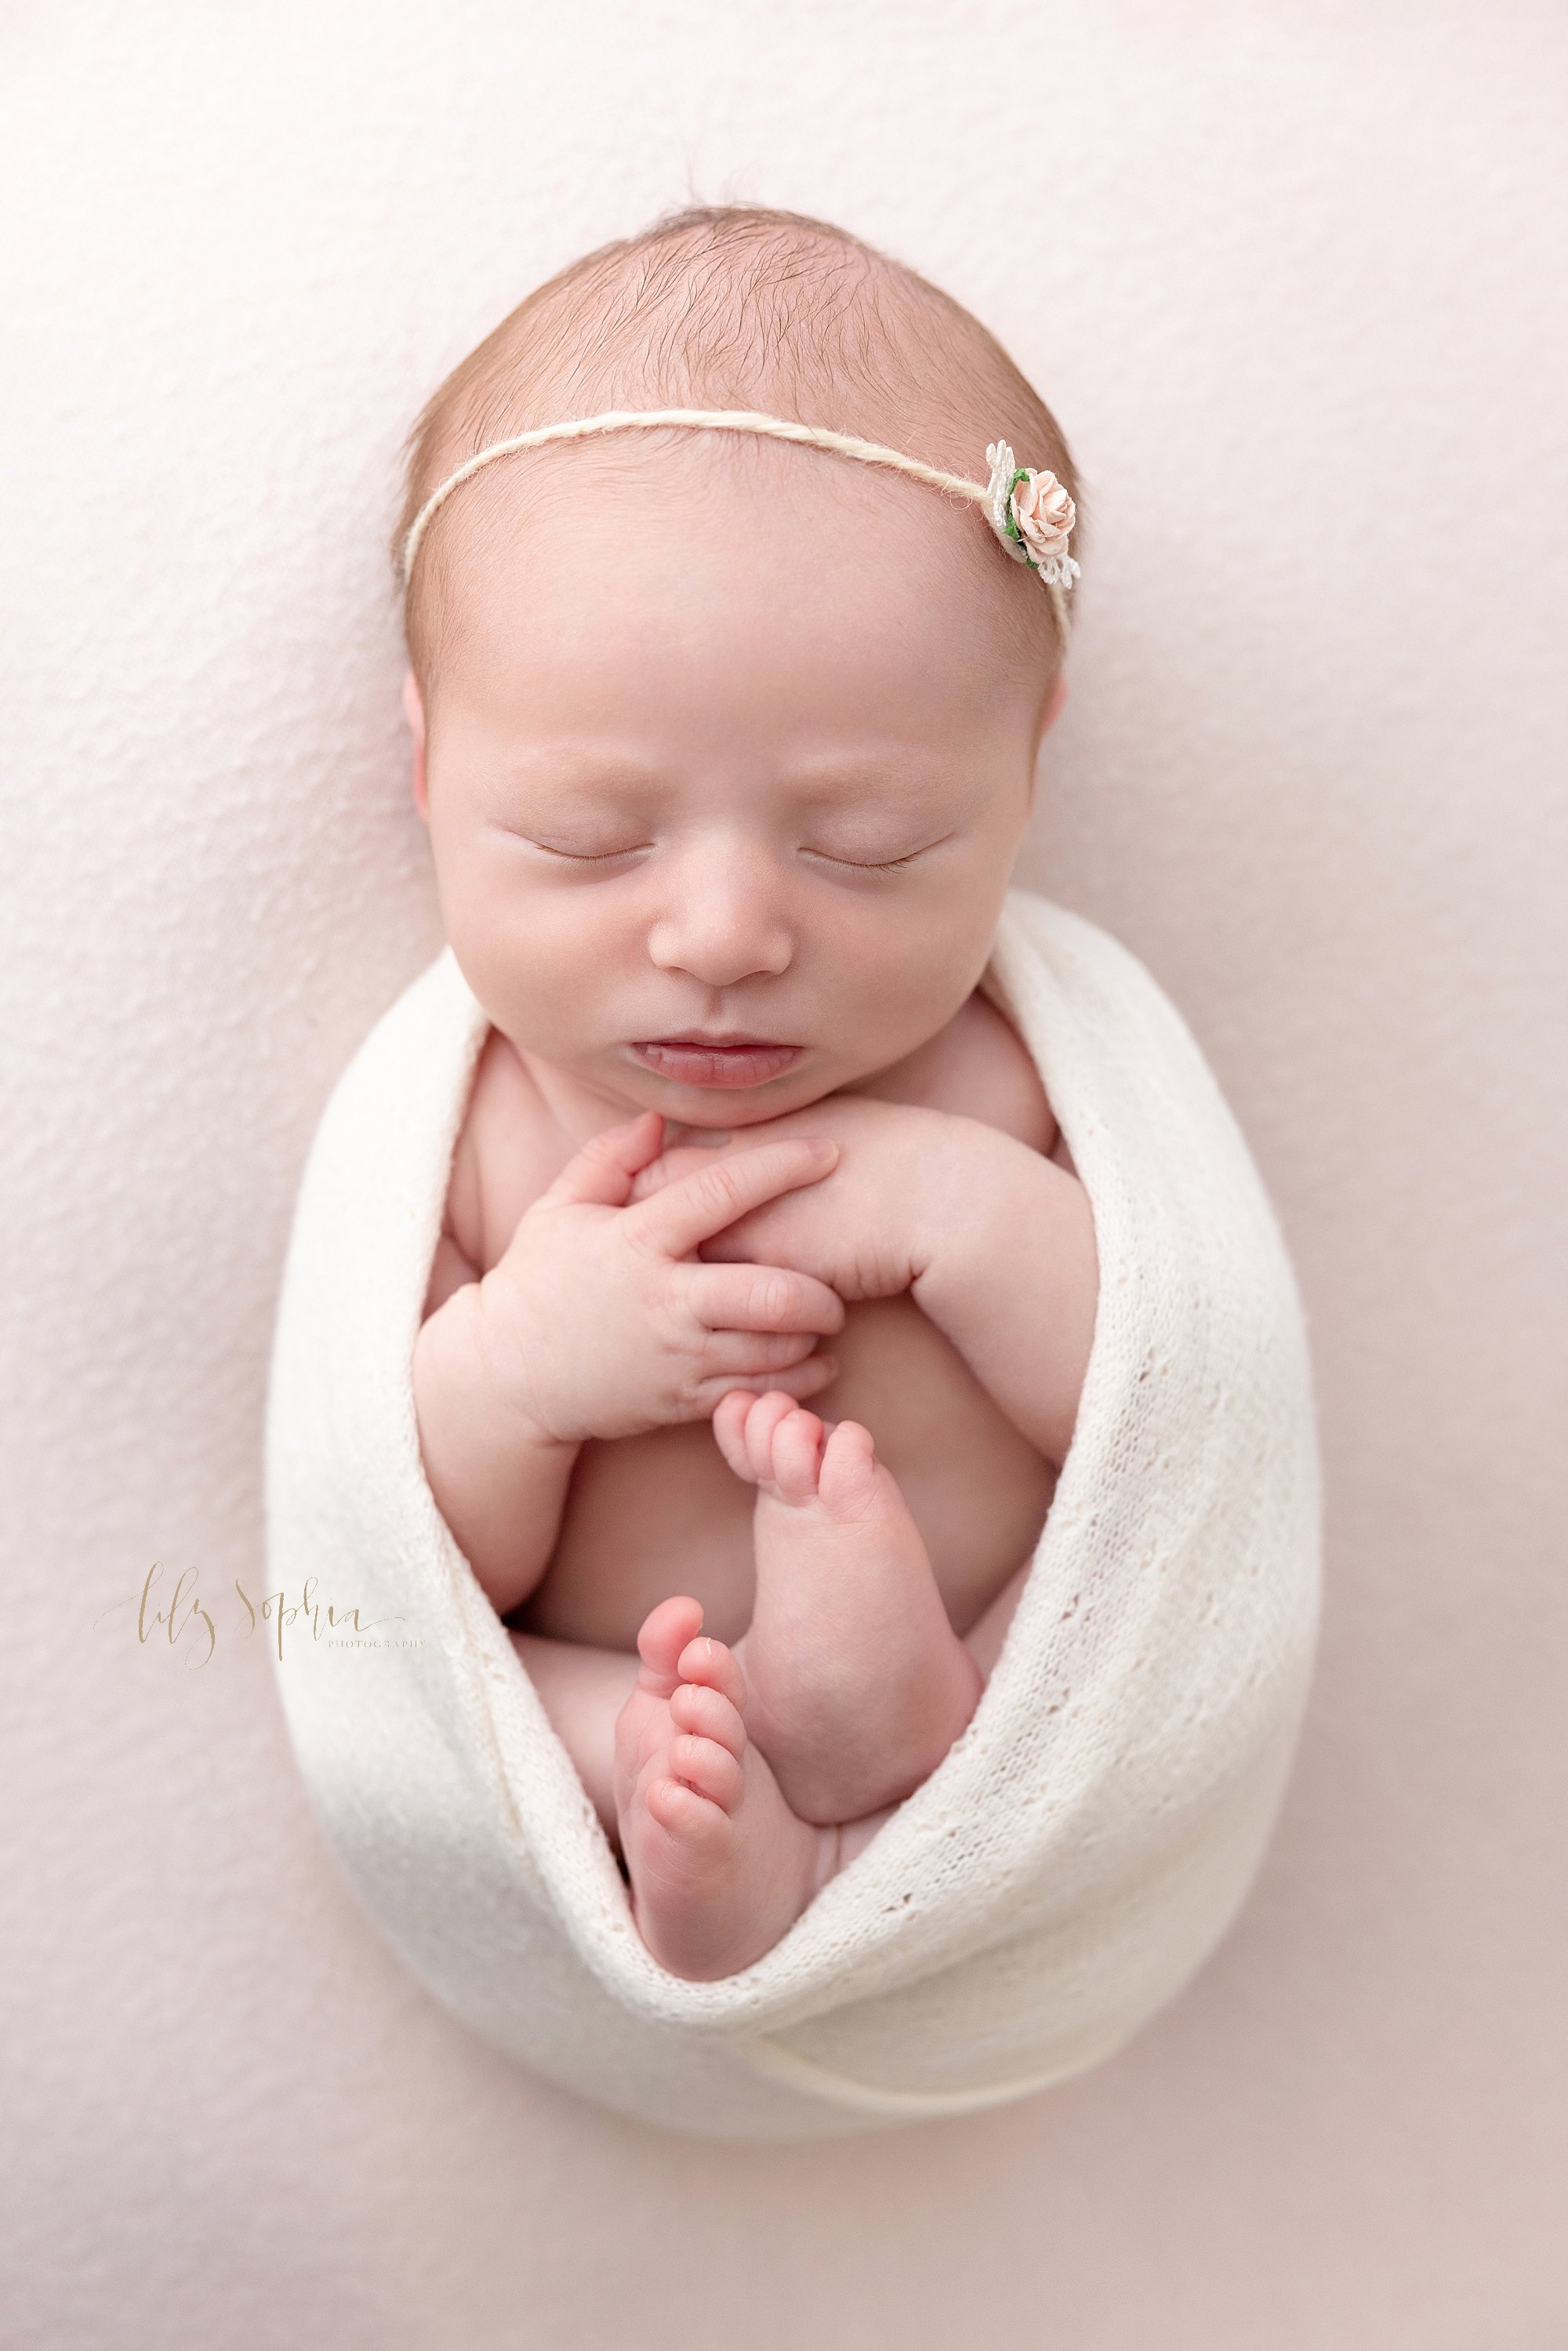 intown-atlanta-decatur-kirkwood-buckhead-studio-family-newborn-infant-baby-girl-photoshoot_4809.jpg